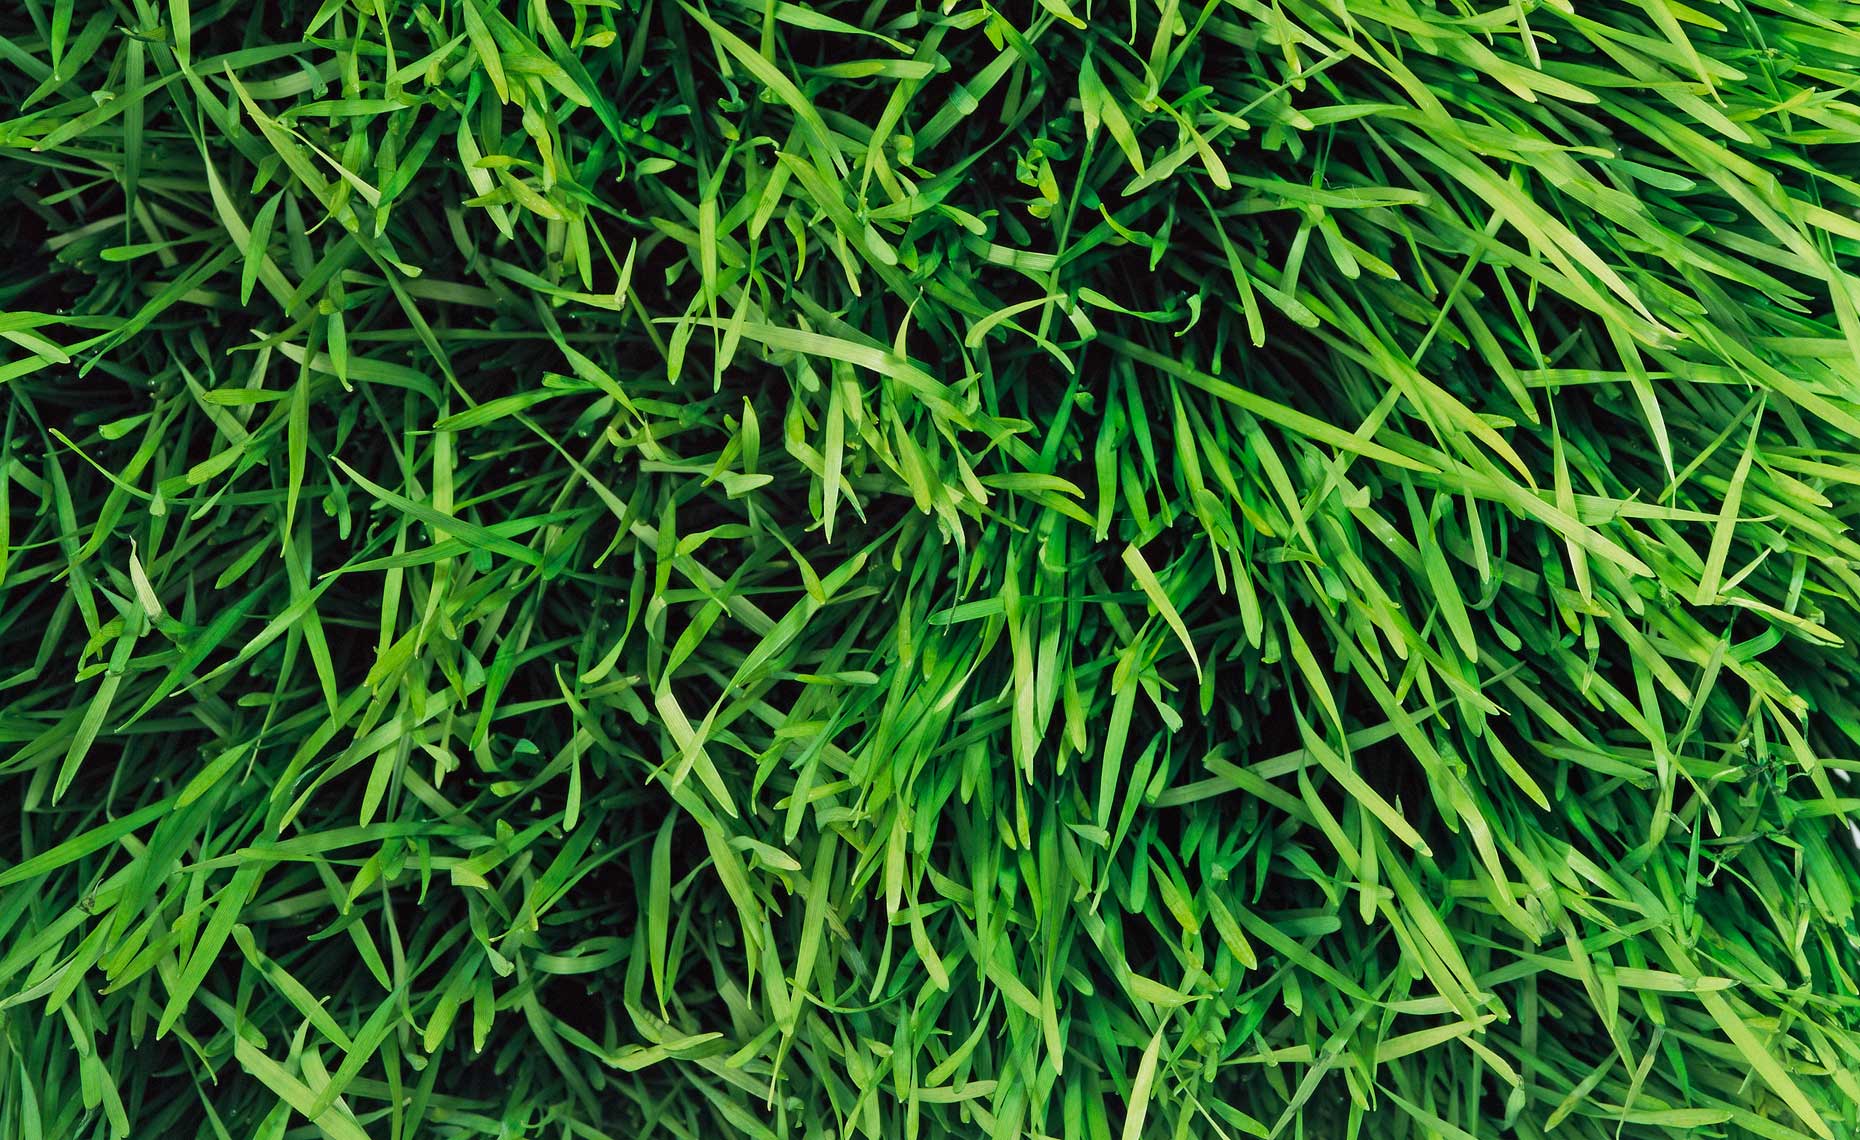 Botanical Still Life | Flora and Fauna, Patch of Lawn Grass